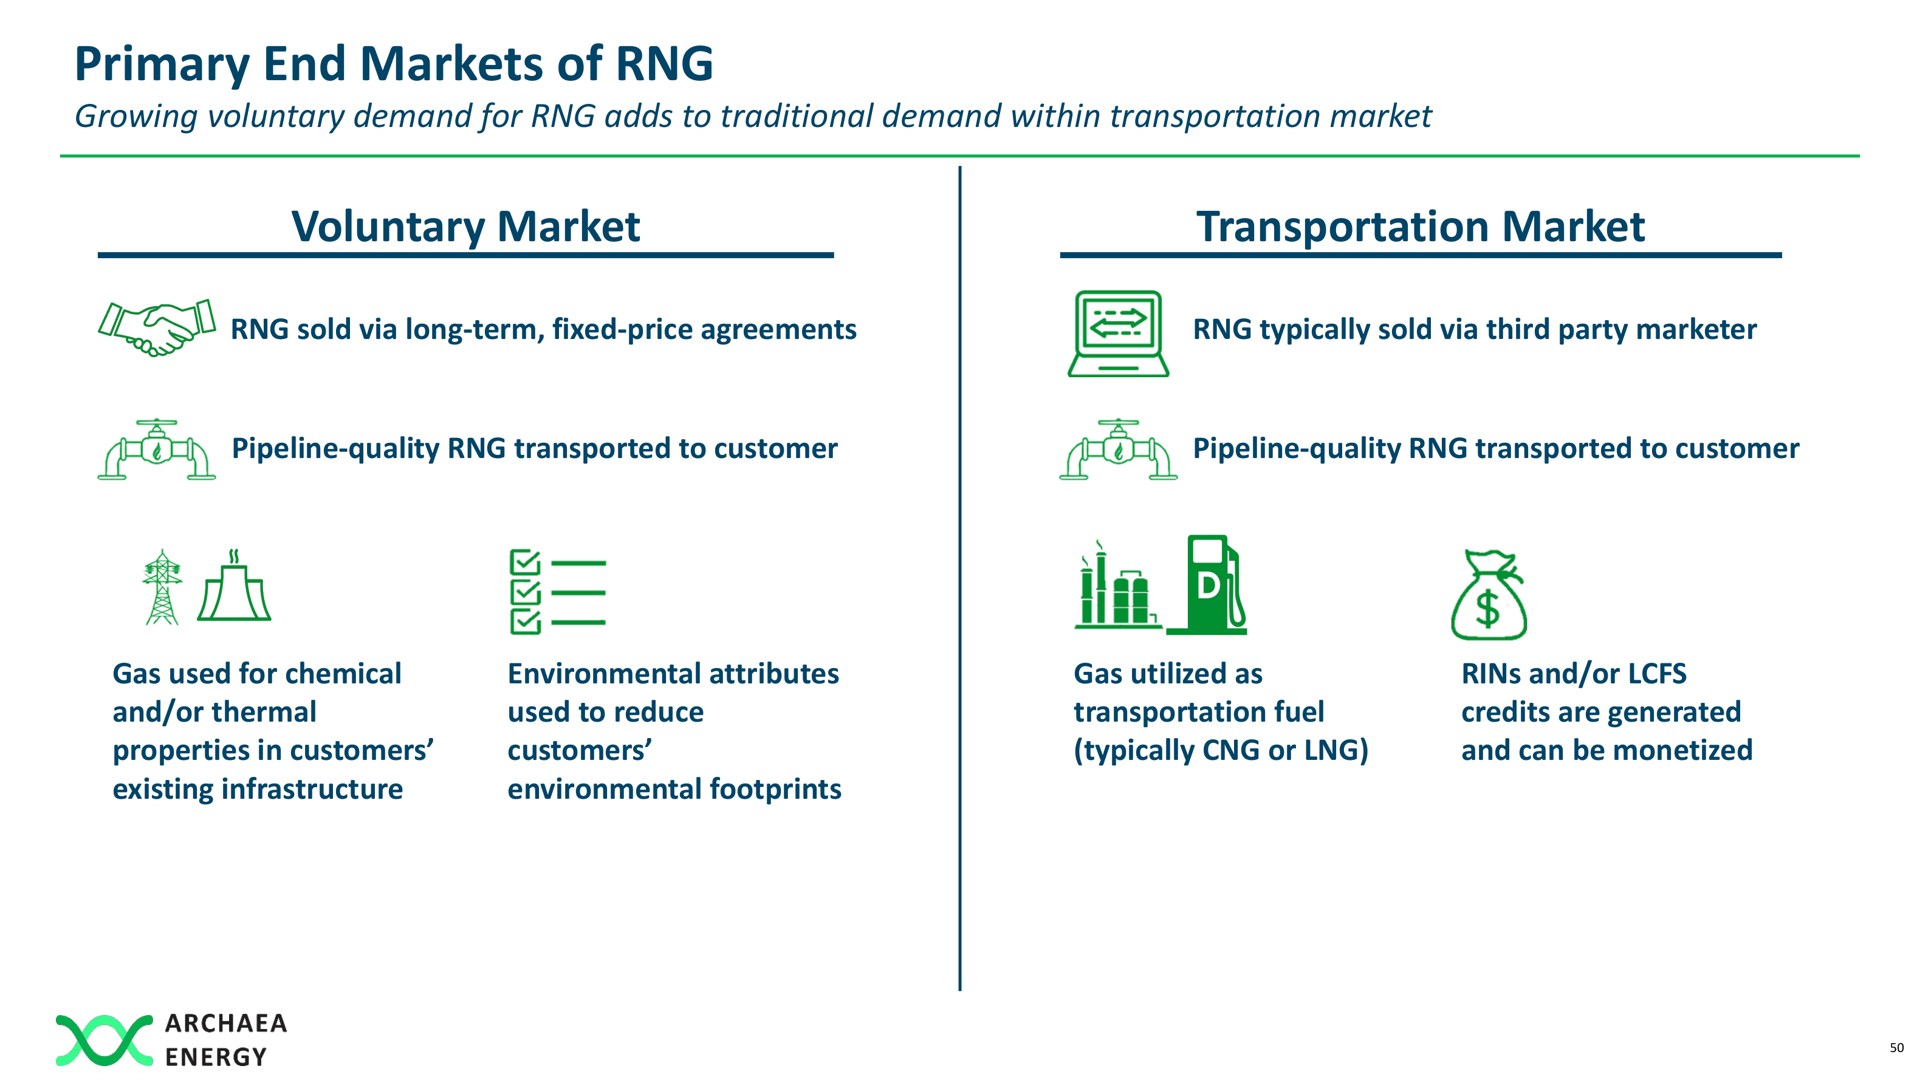 primary end markets of voluntary market transportation market | Archaea Energy